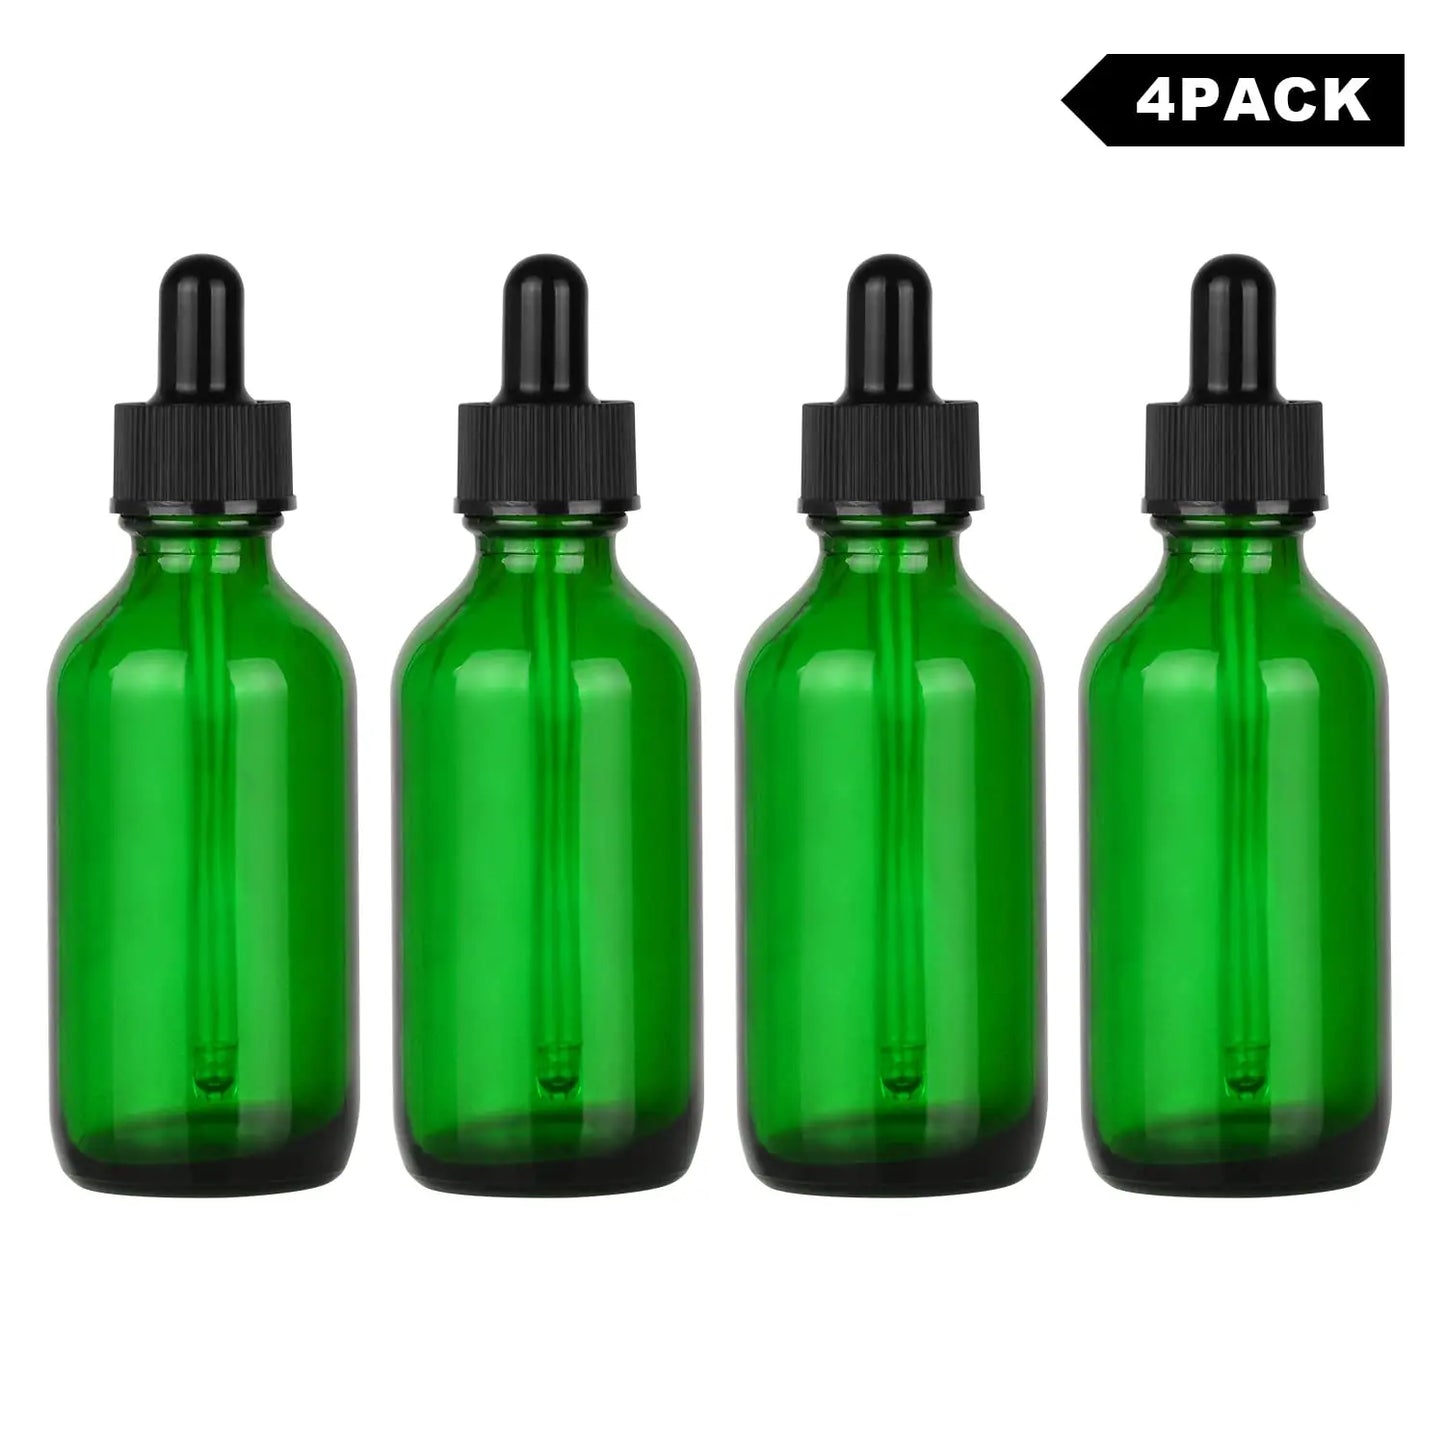 4 Pack Glass Dropper Bottle with Inner Plug and Label (60 ml, Green) Bottles - Dropper Bottles